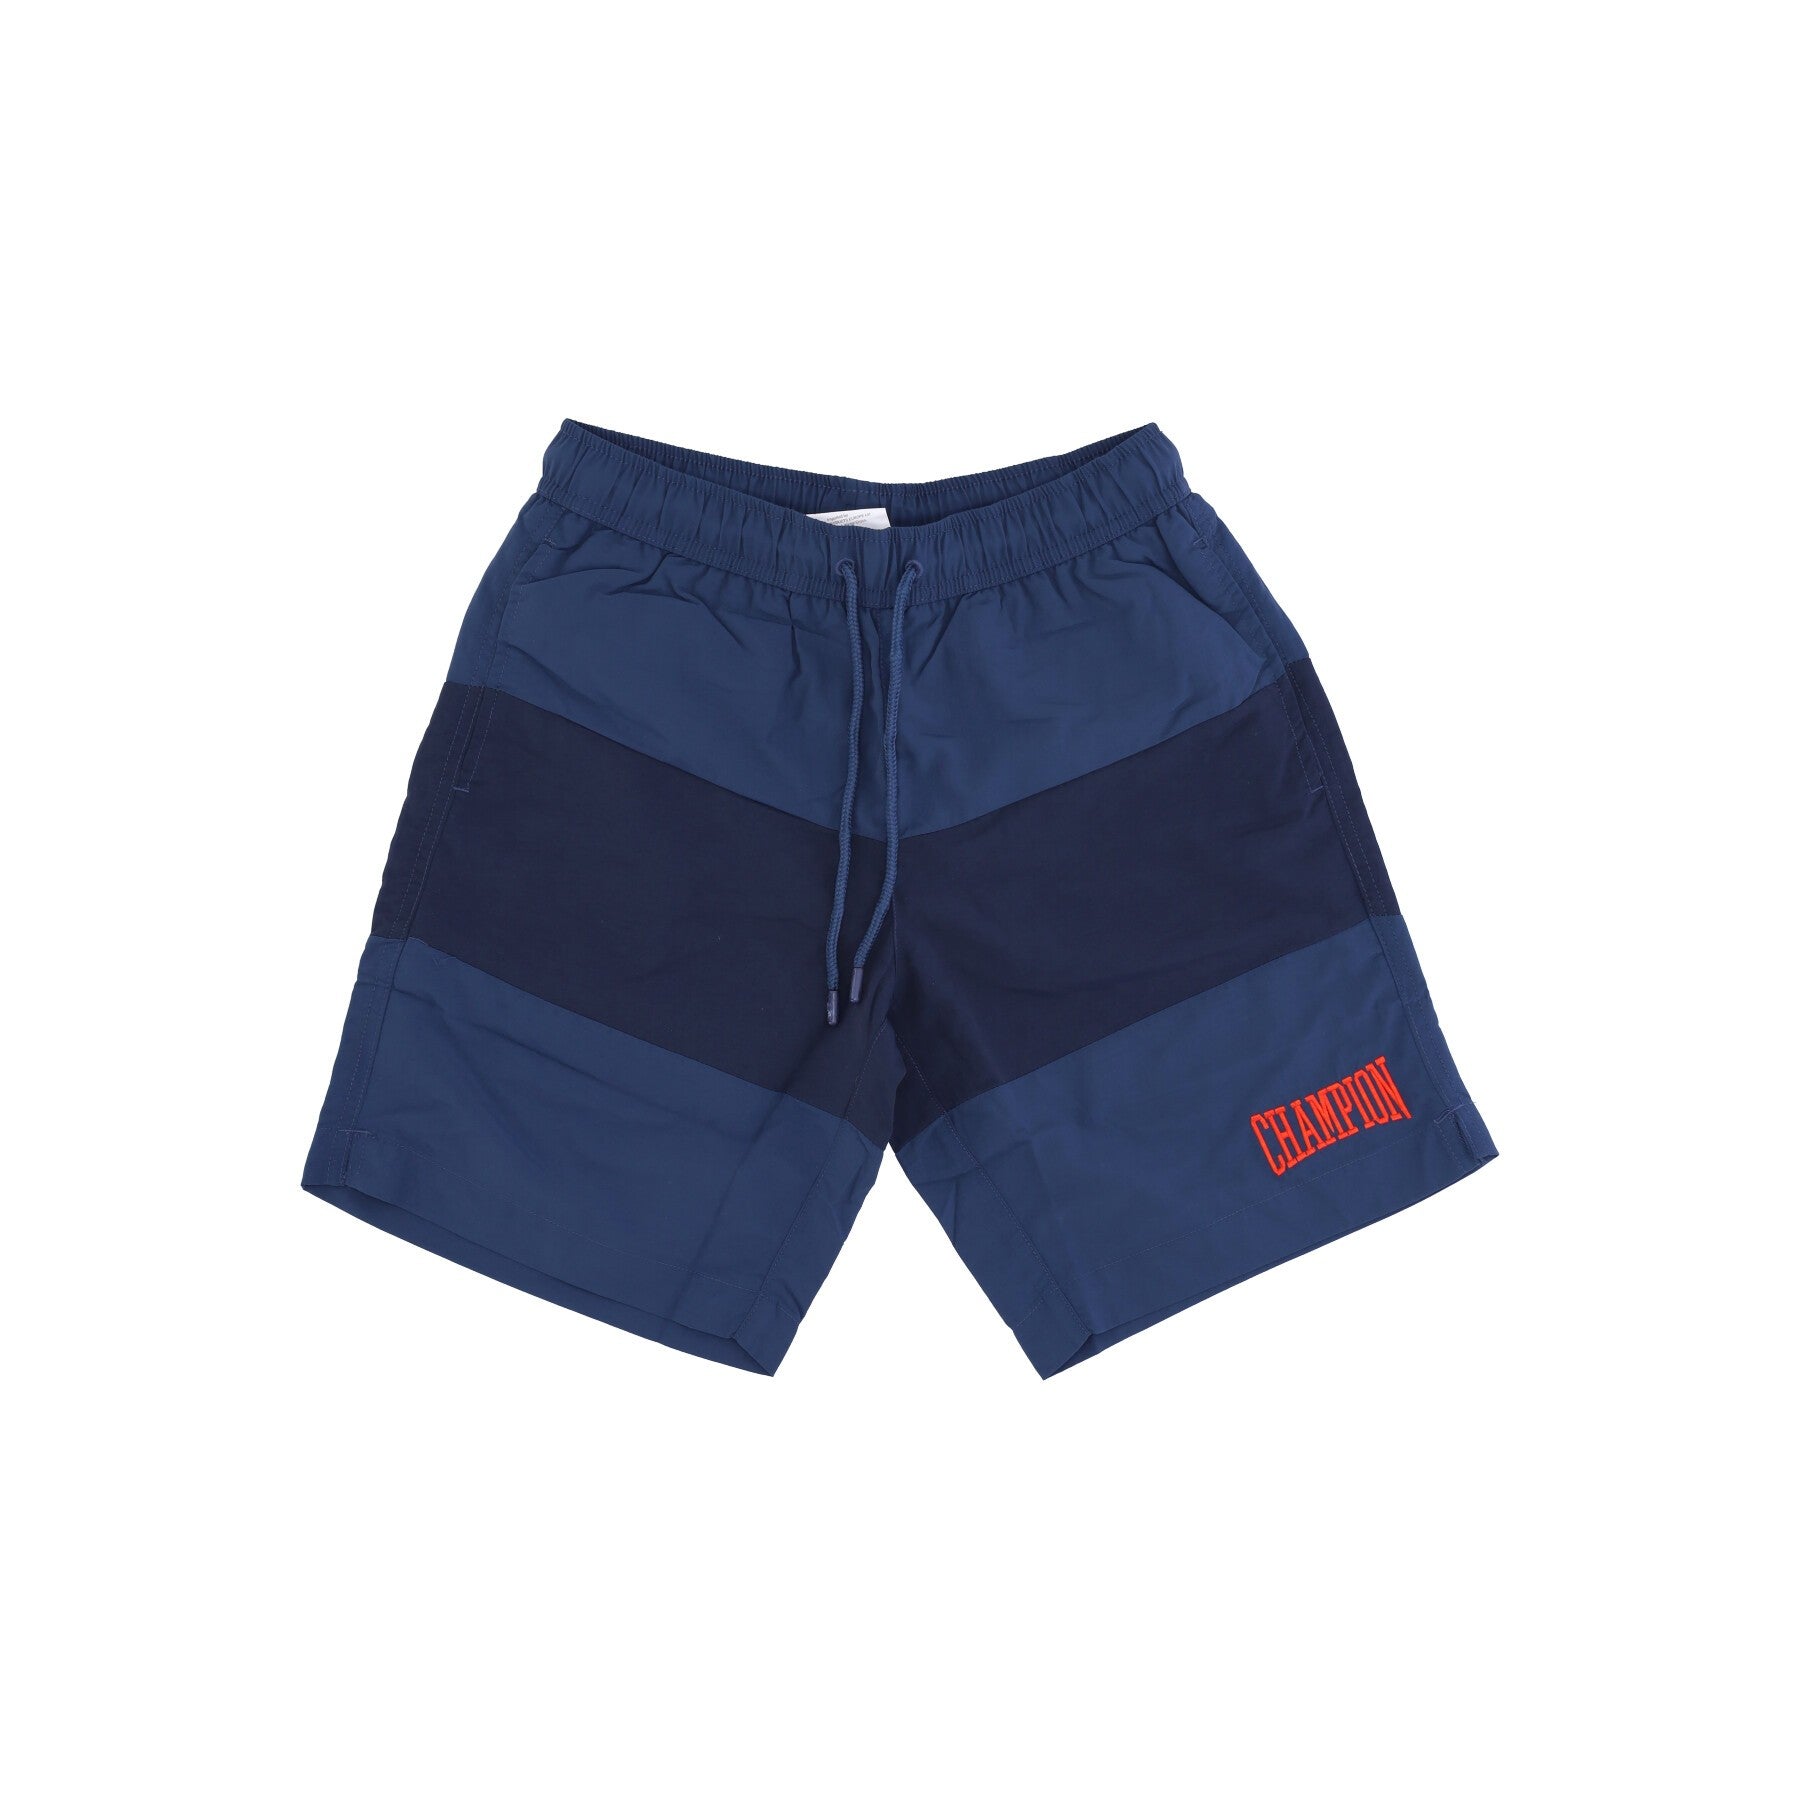 Men's Beachshort Blue/navy Swim Shorts